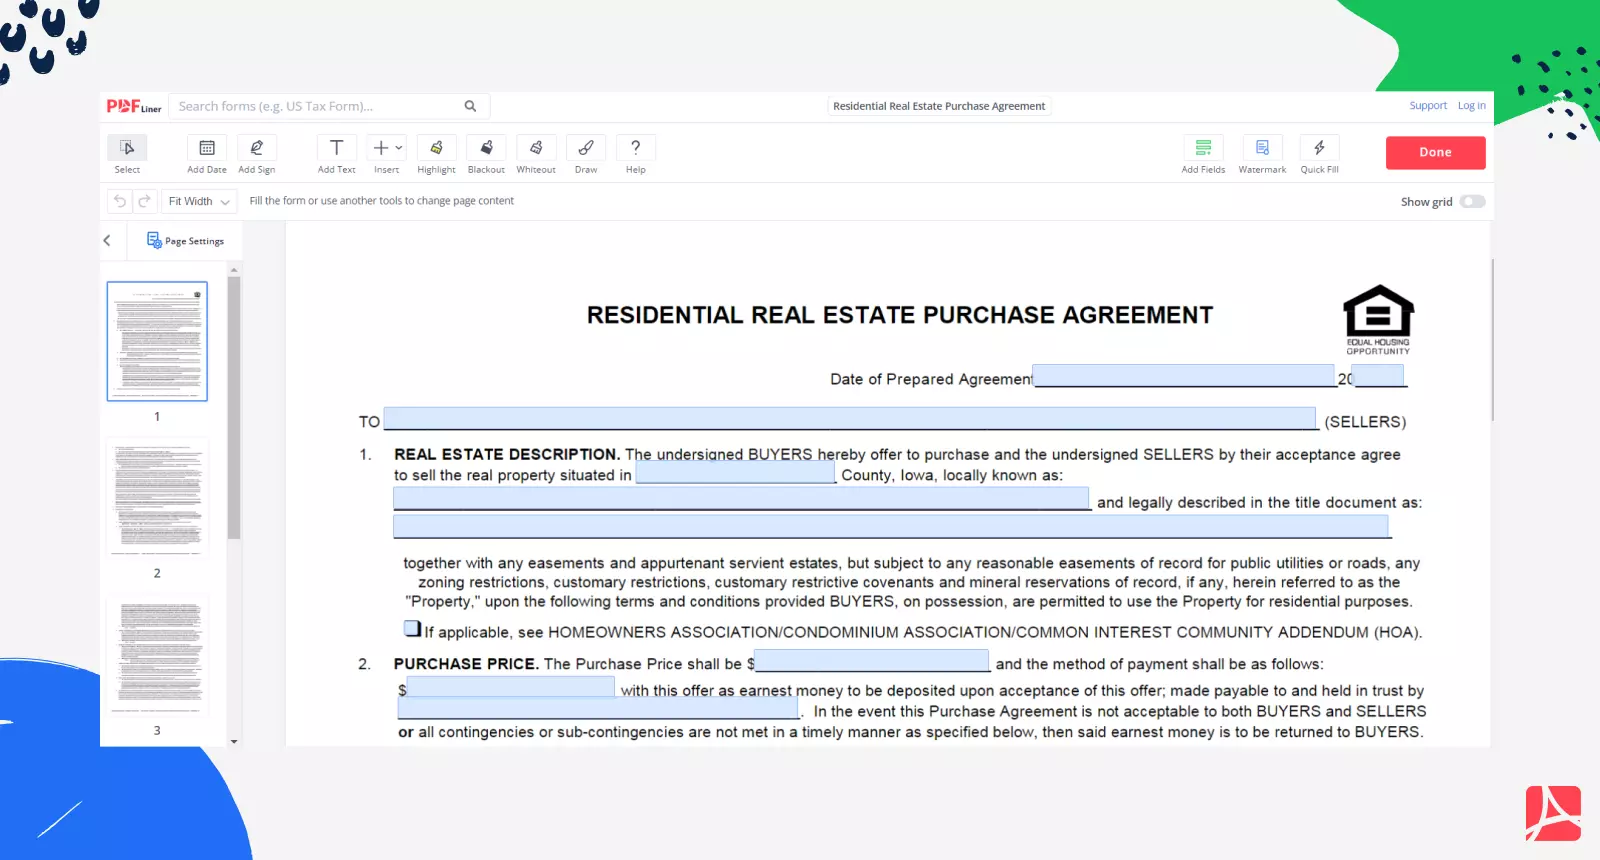 Residential Real Estate Purchase Agreement on PDFLiner